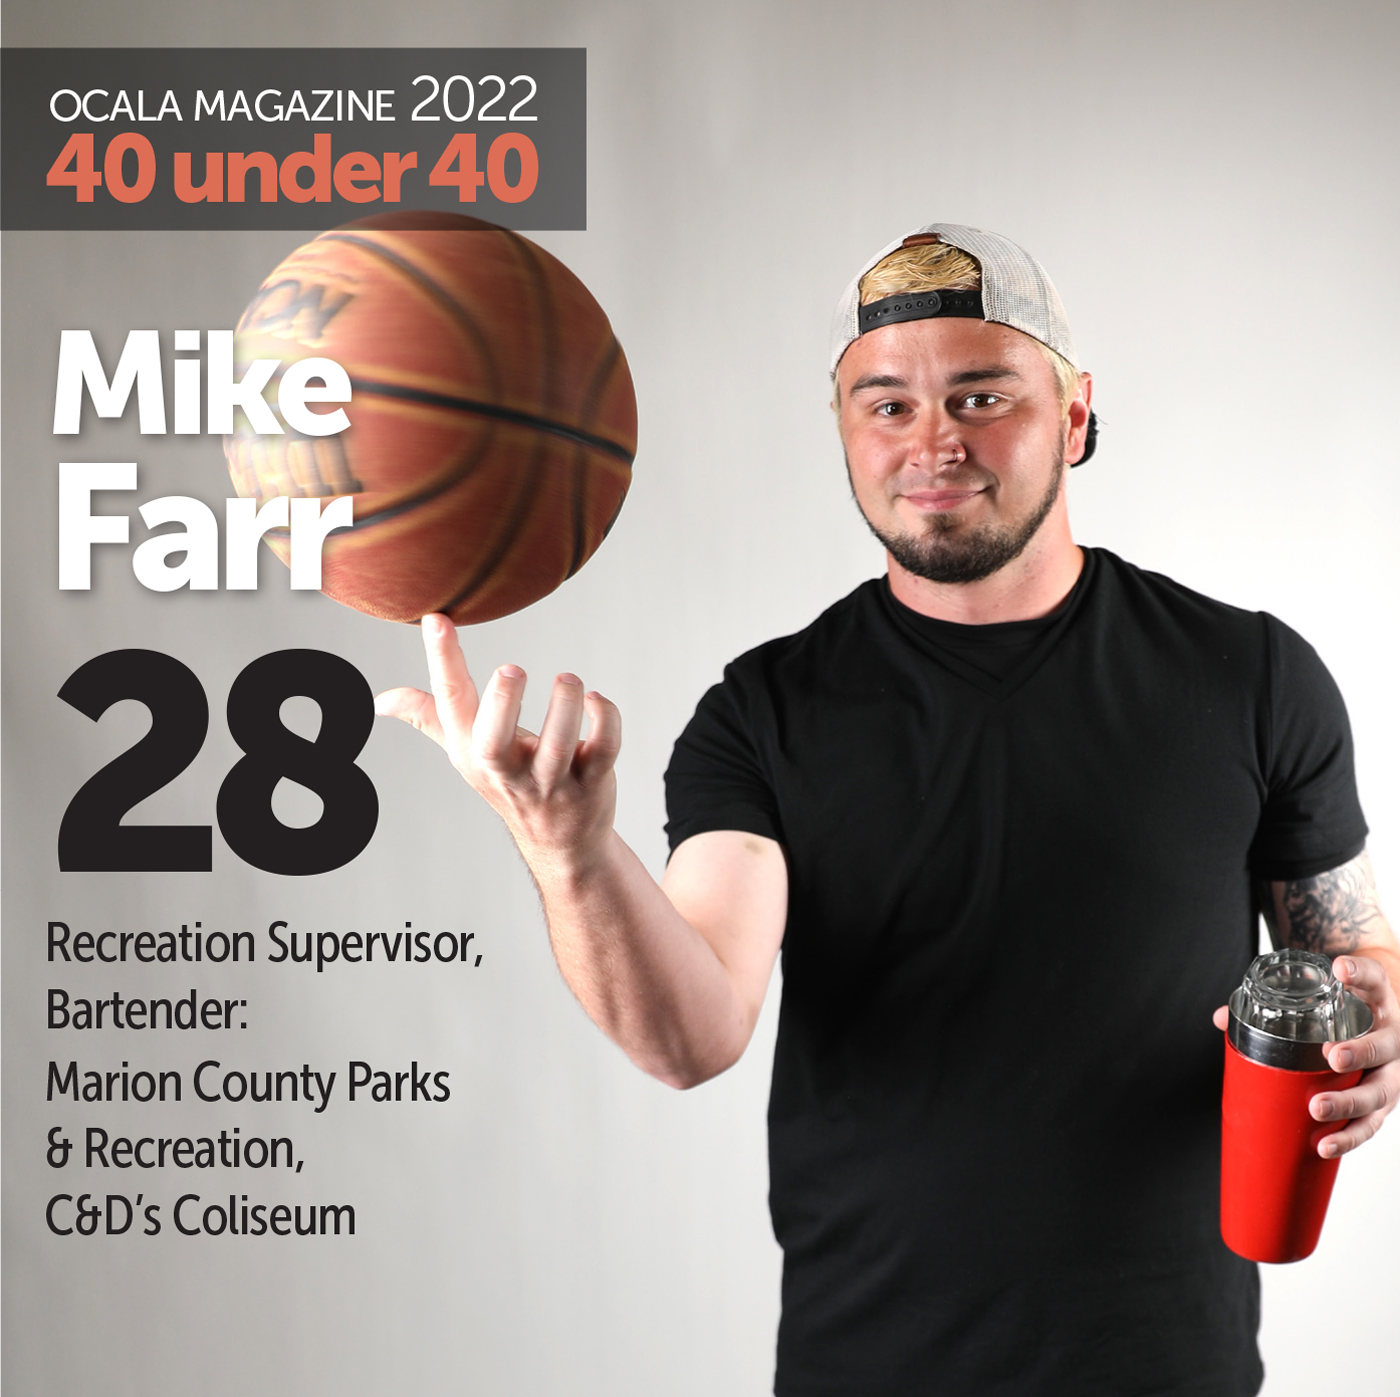 Mike Farr Ocala Magazine 2022 40 under 40